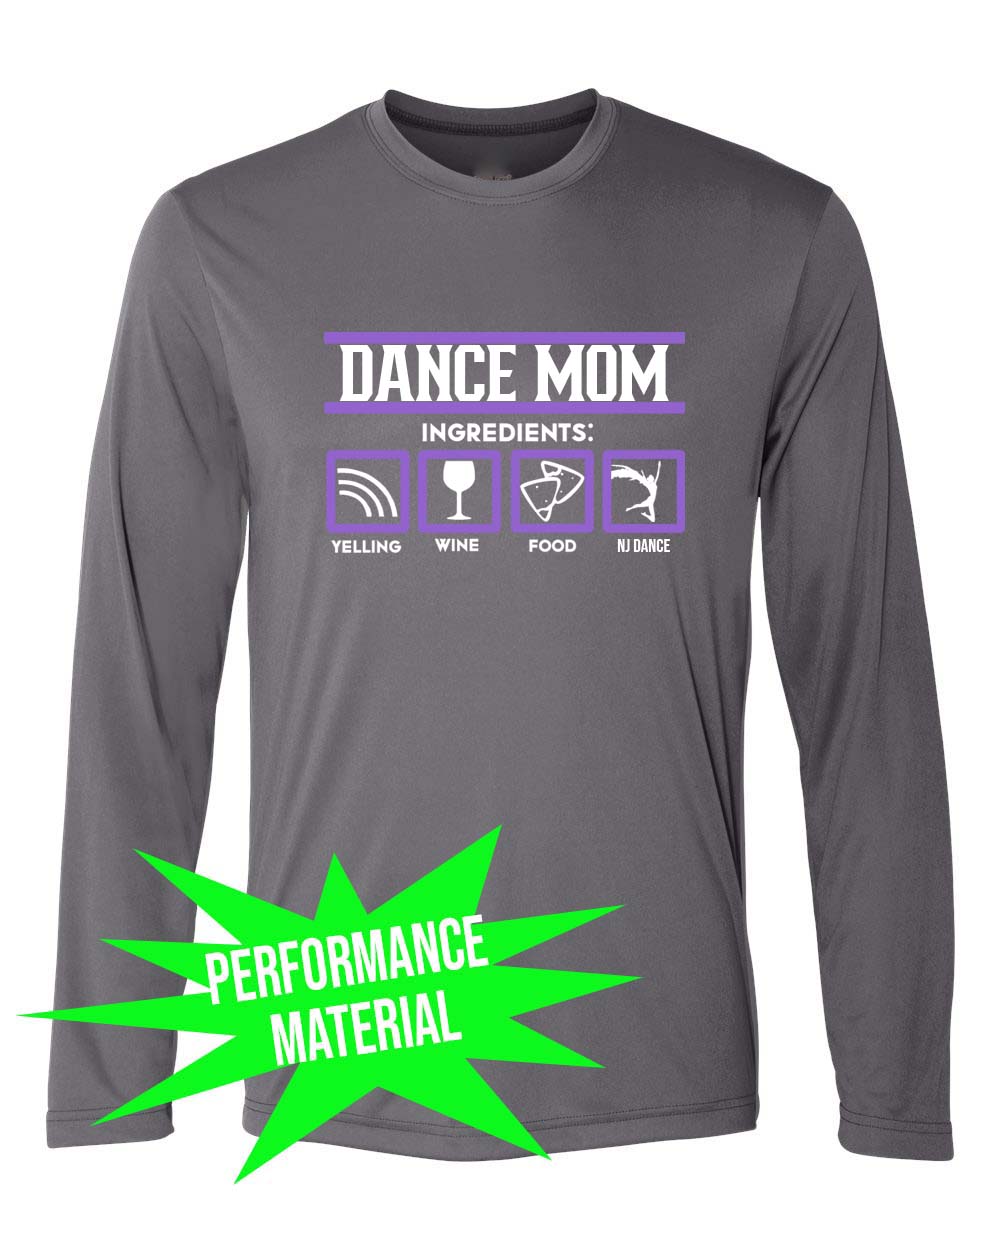 NJ Dance Performance Material Design 8 Long Sleeve Shirt